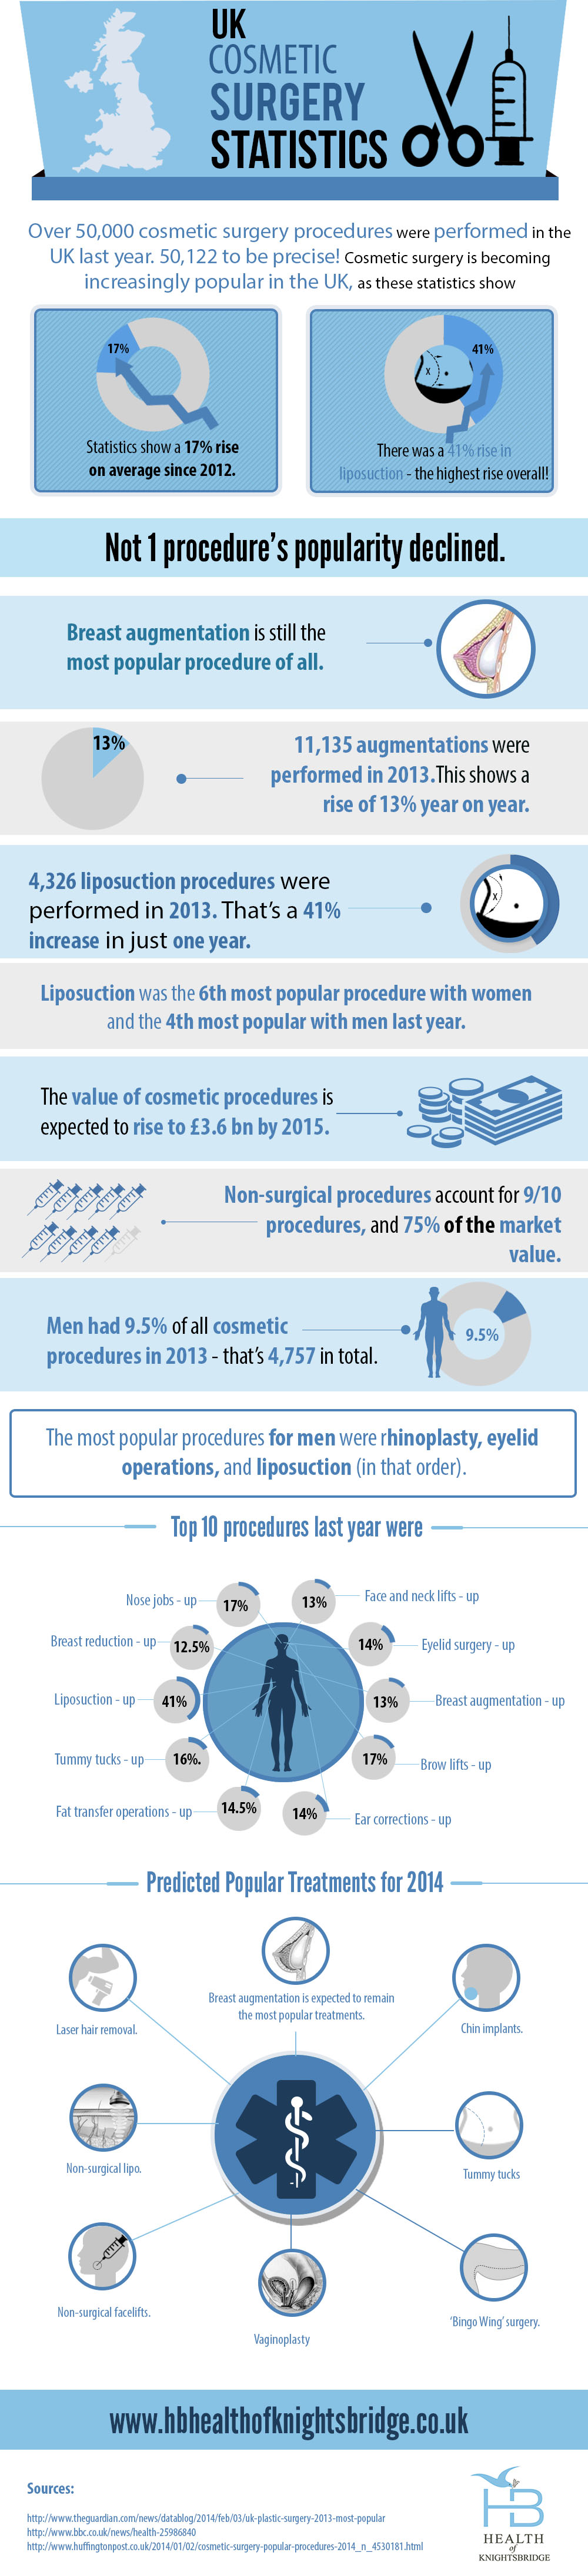 UK Cosmetic Surgery Statistics